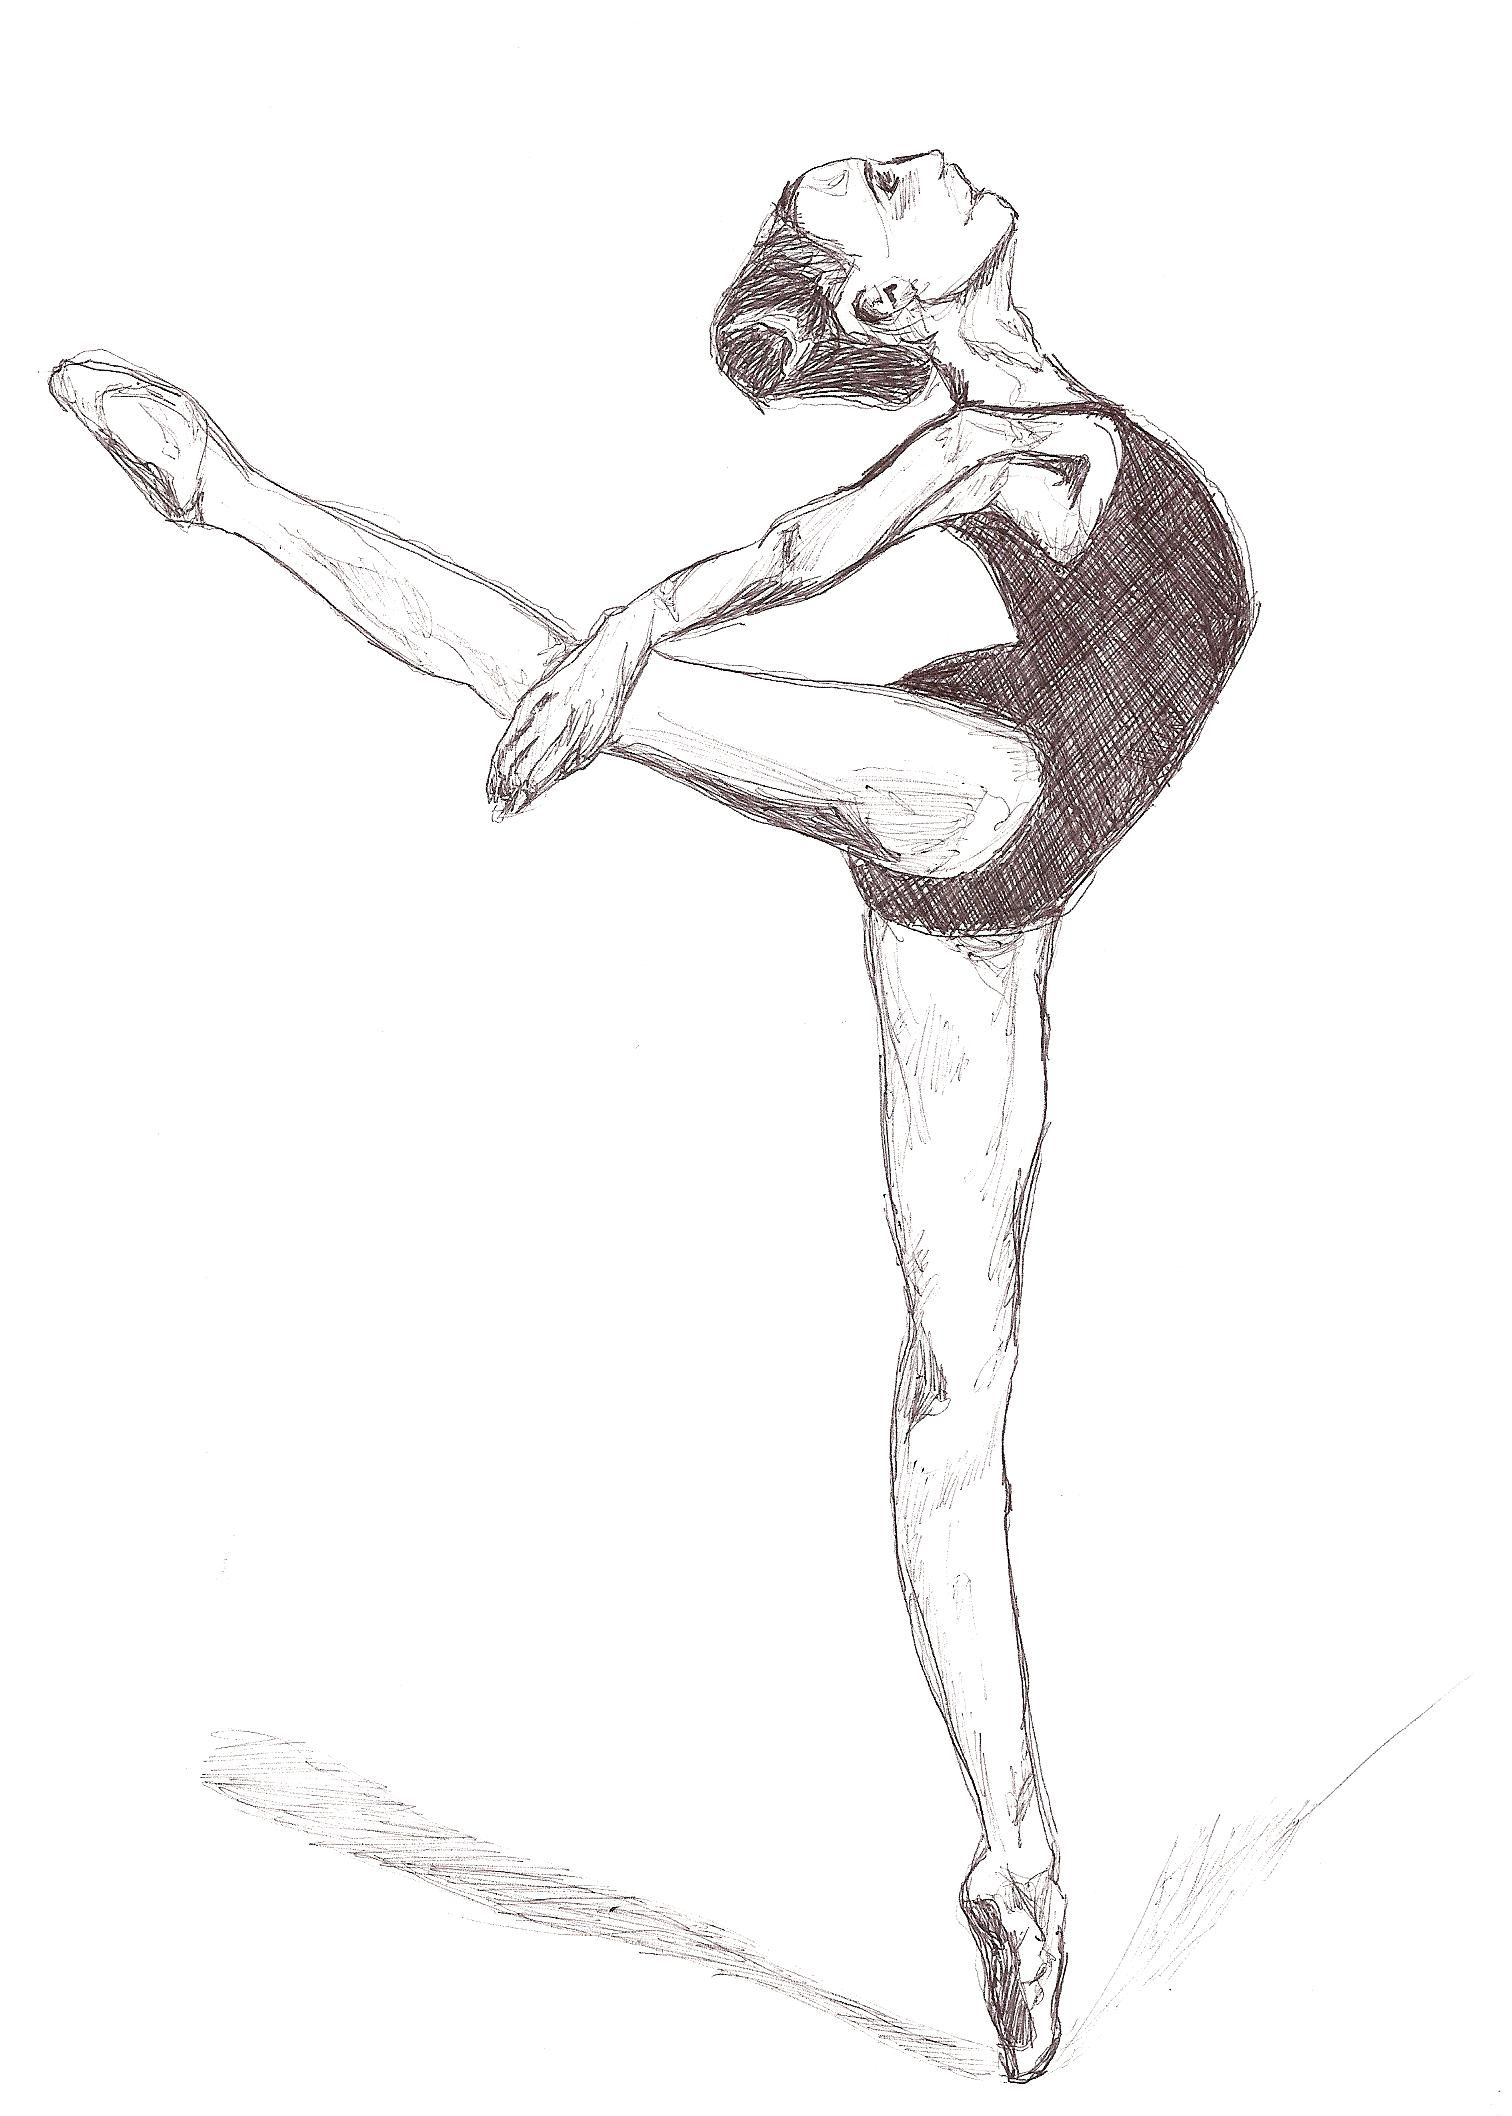 Нарисованные карандашом балерины: D1 80 d0 b8 d1 81 d1 83 d0 bd d0 be